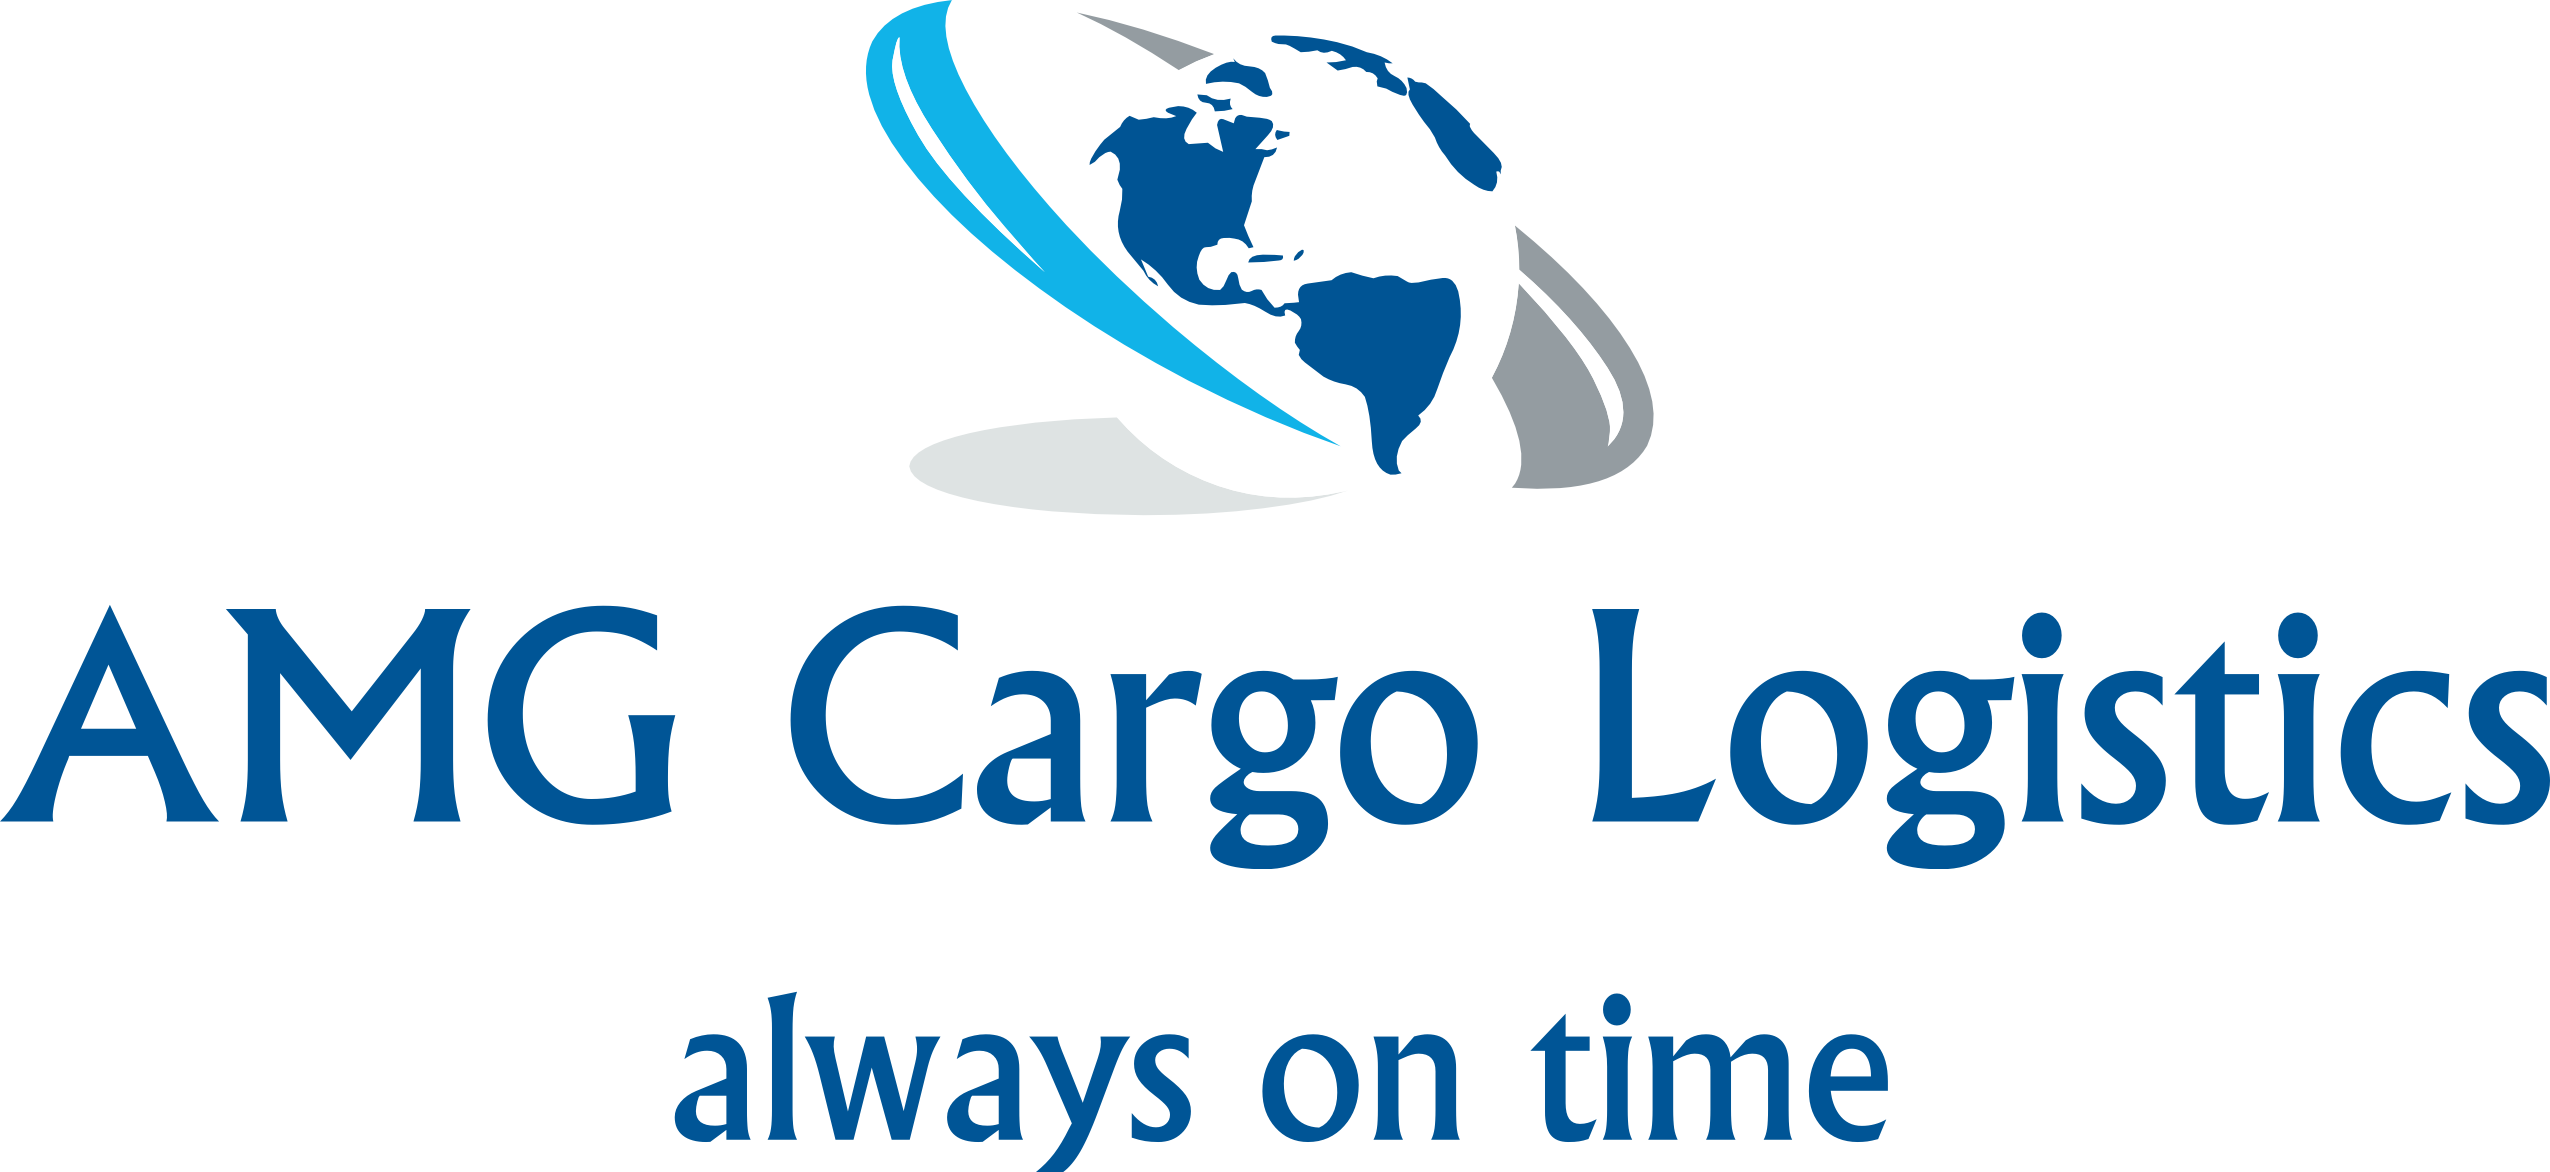 AMG Cargo Logistics